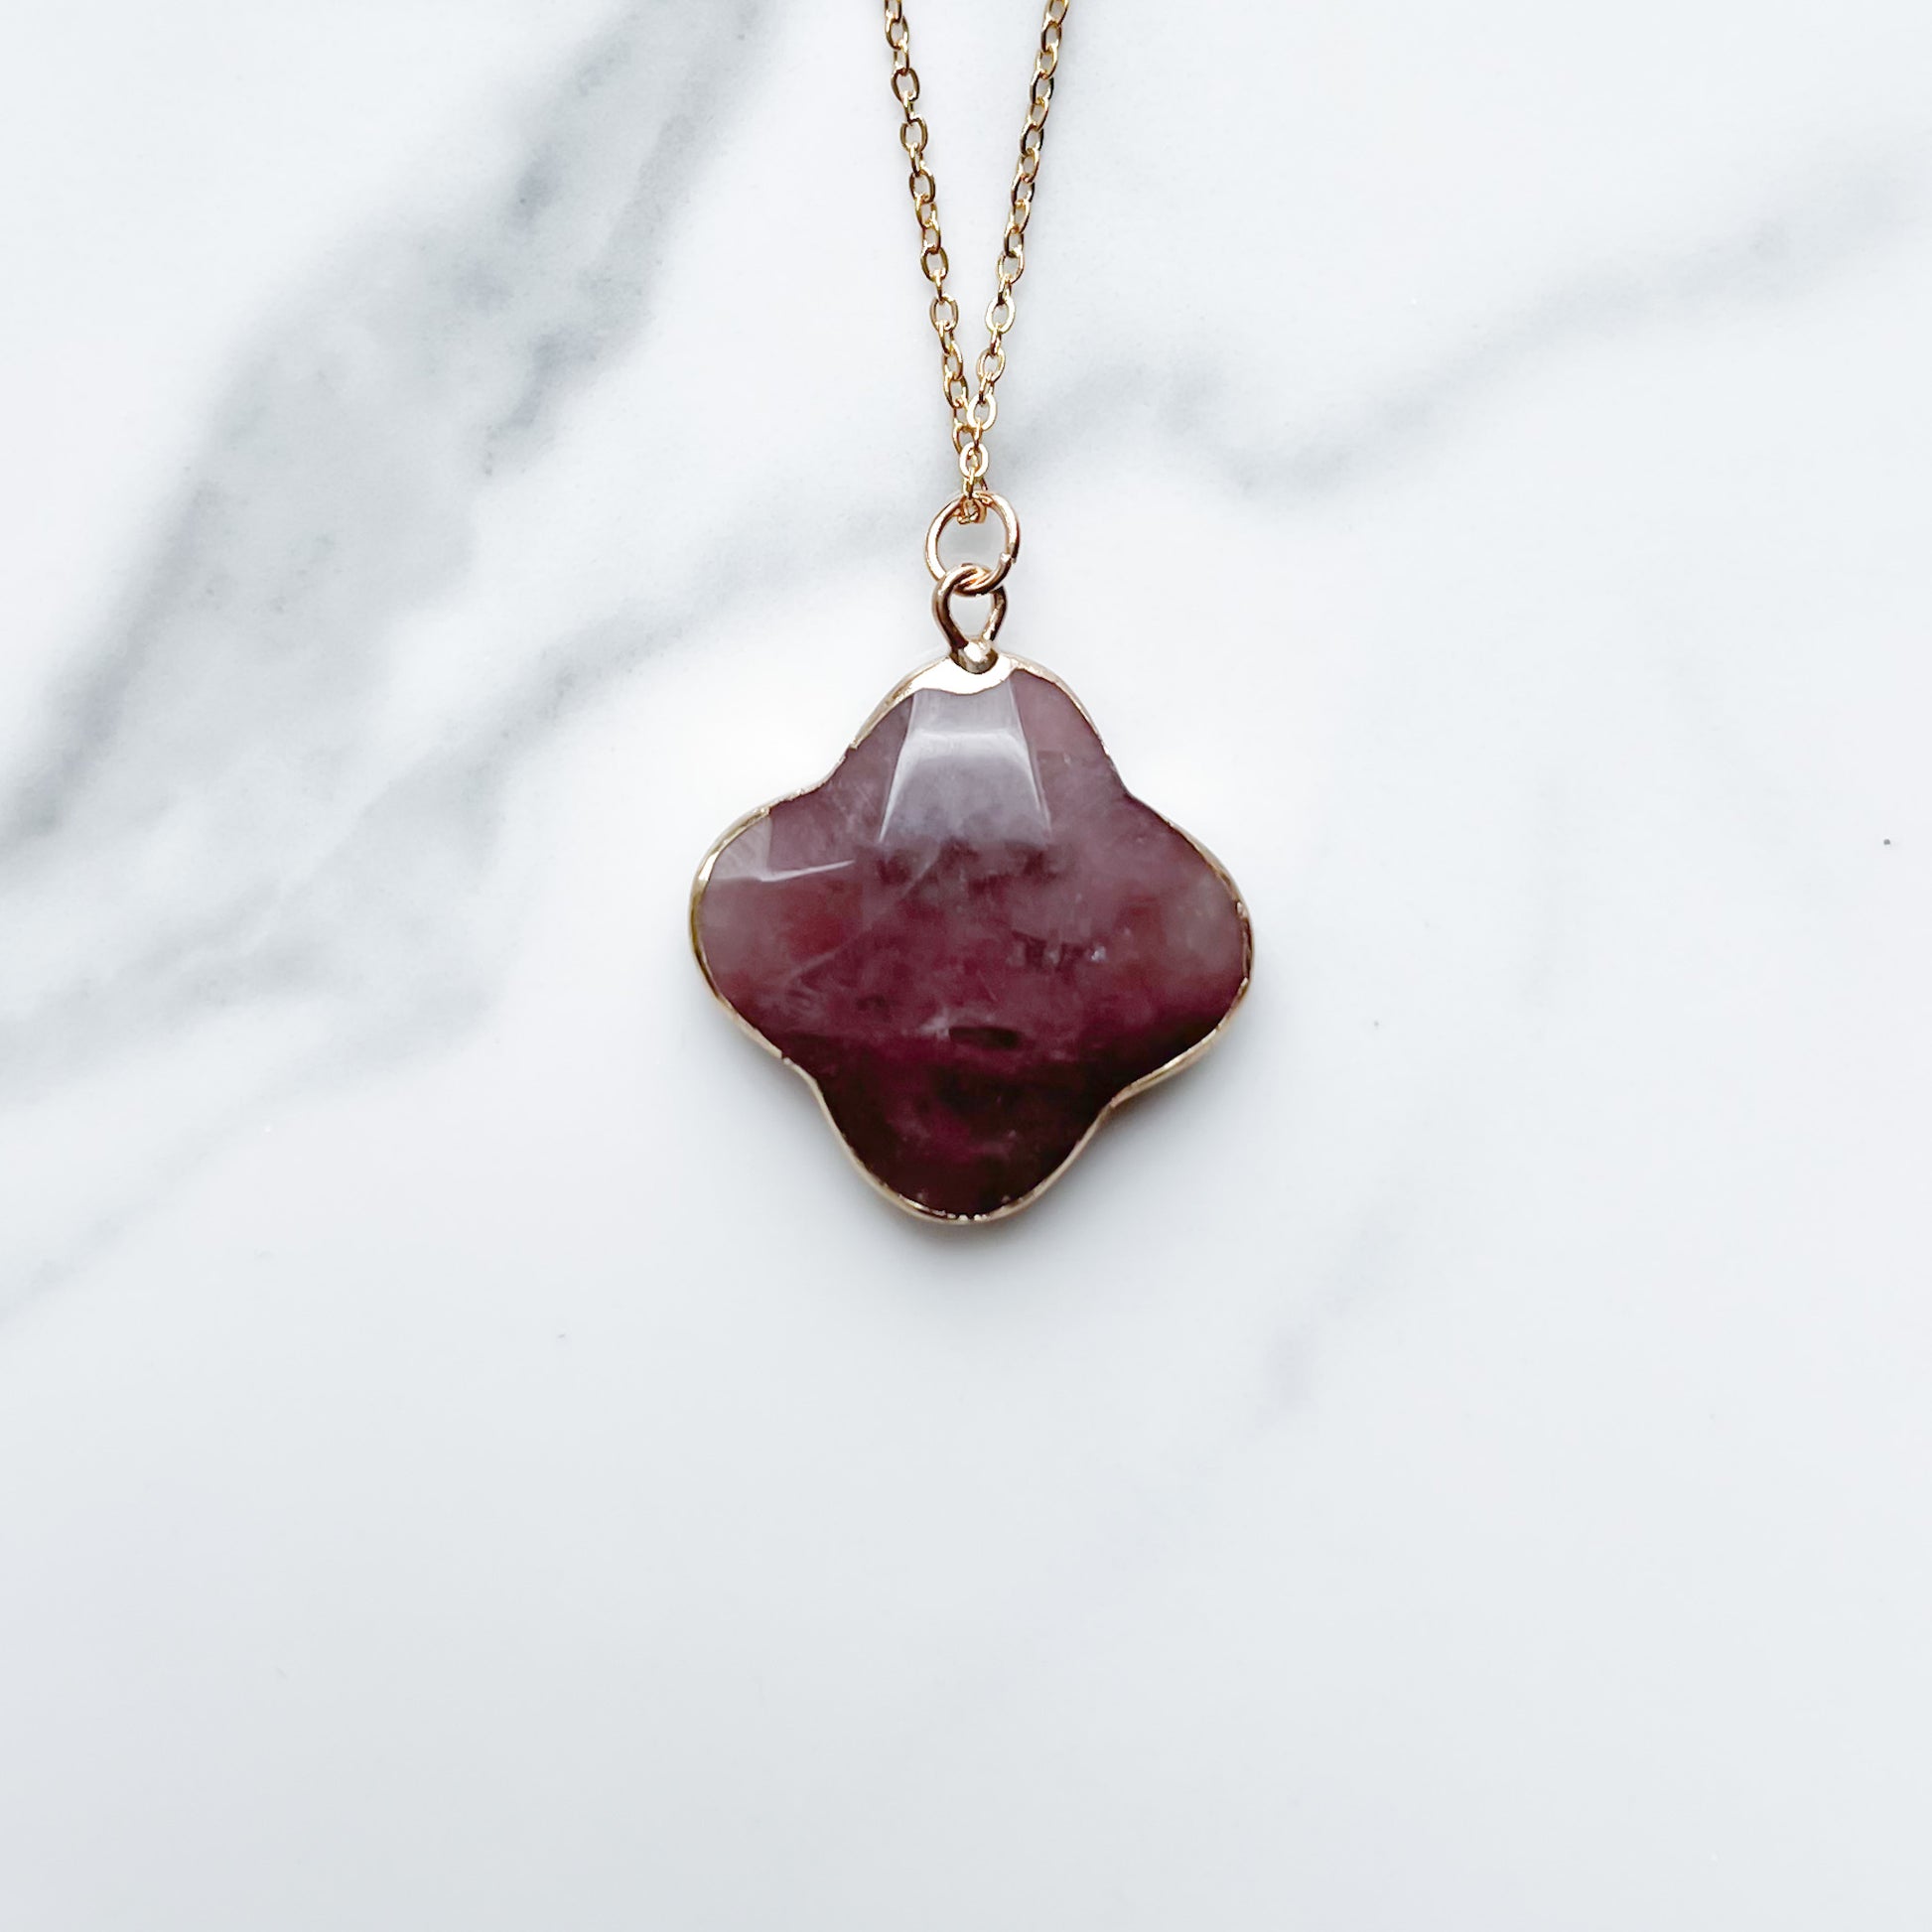 Semi precious healing gemstone clover shaped pendant necklace in strawberry quartz